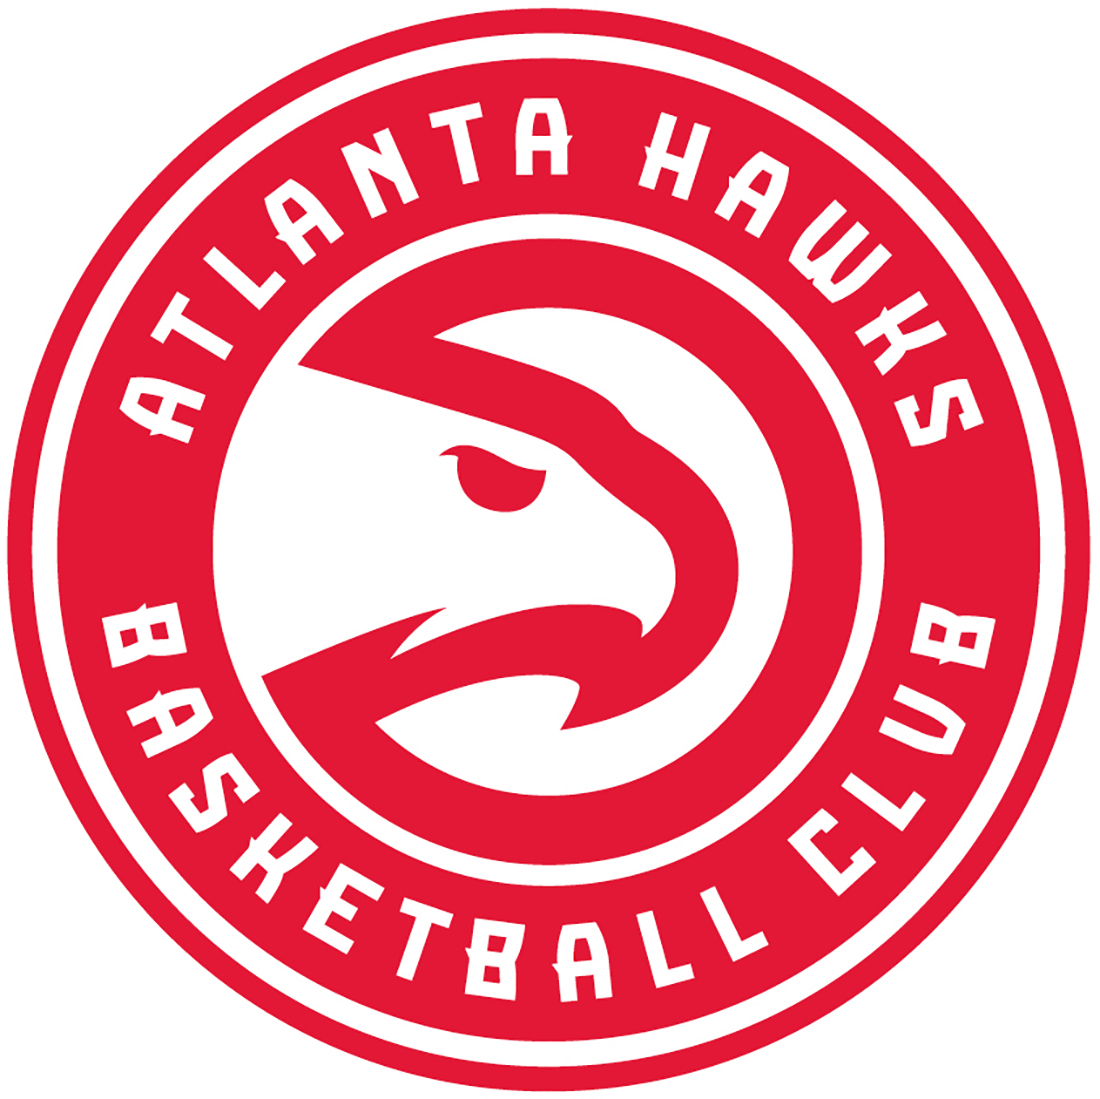 Nueva era: Atlanta Hawks Basketball Club por viva basquet